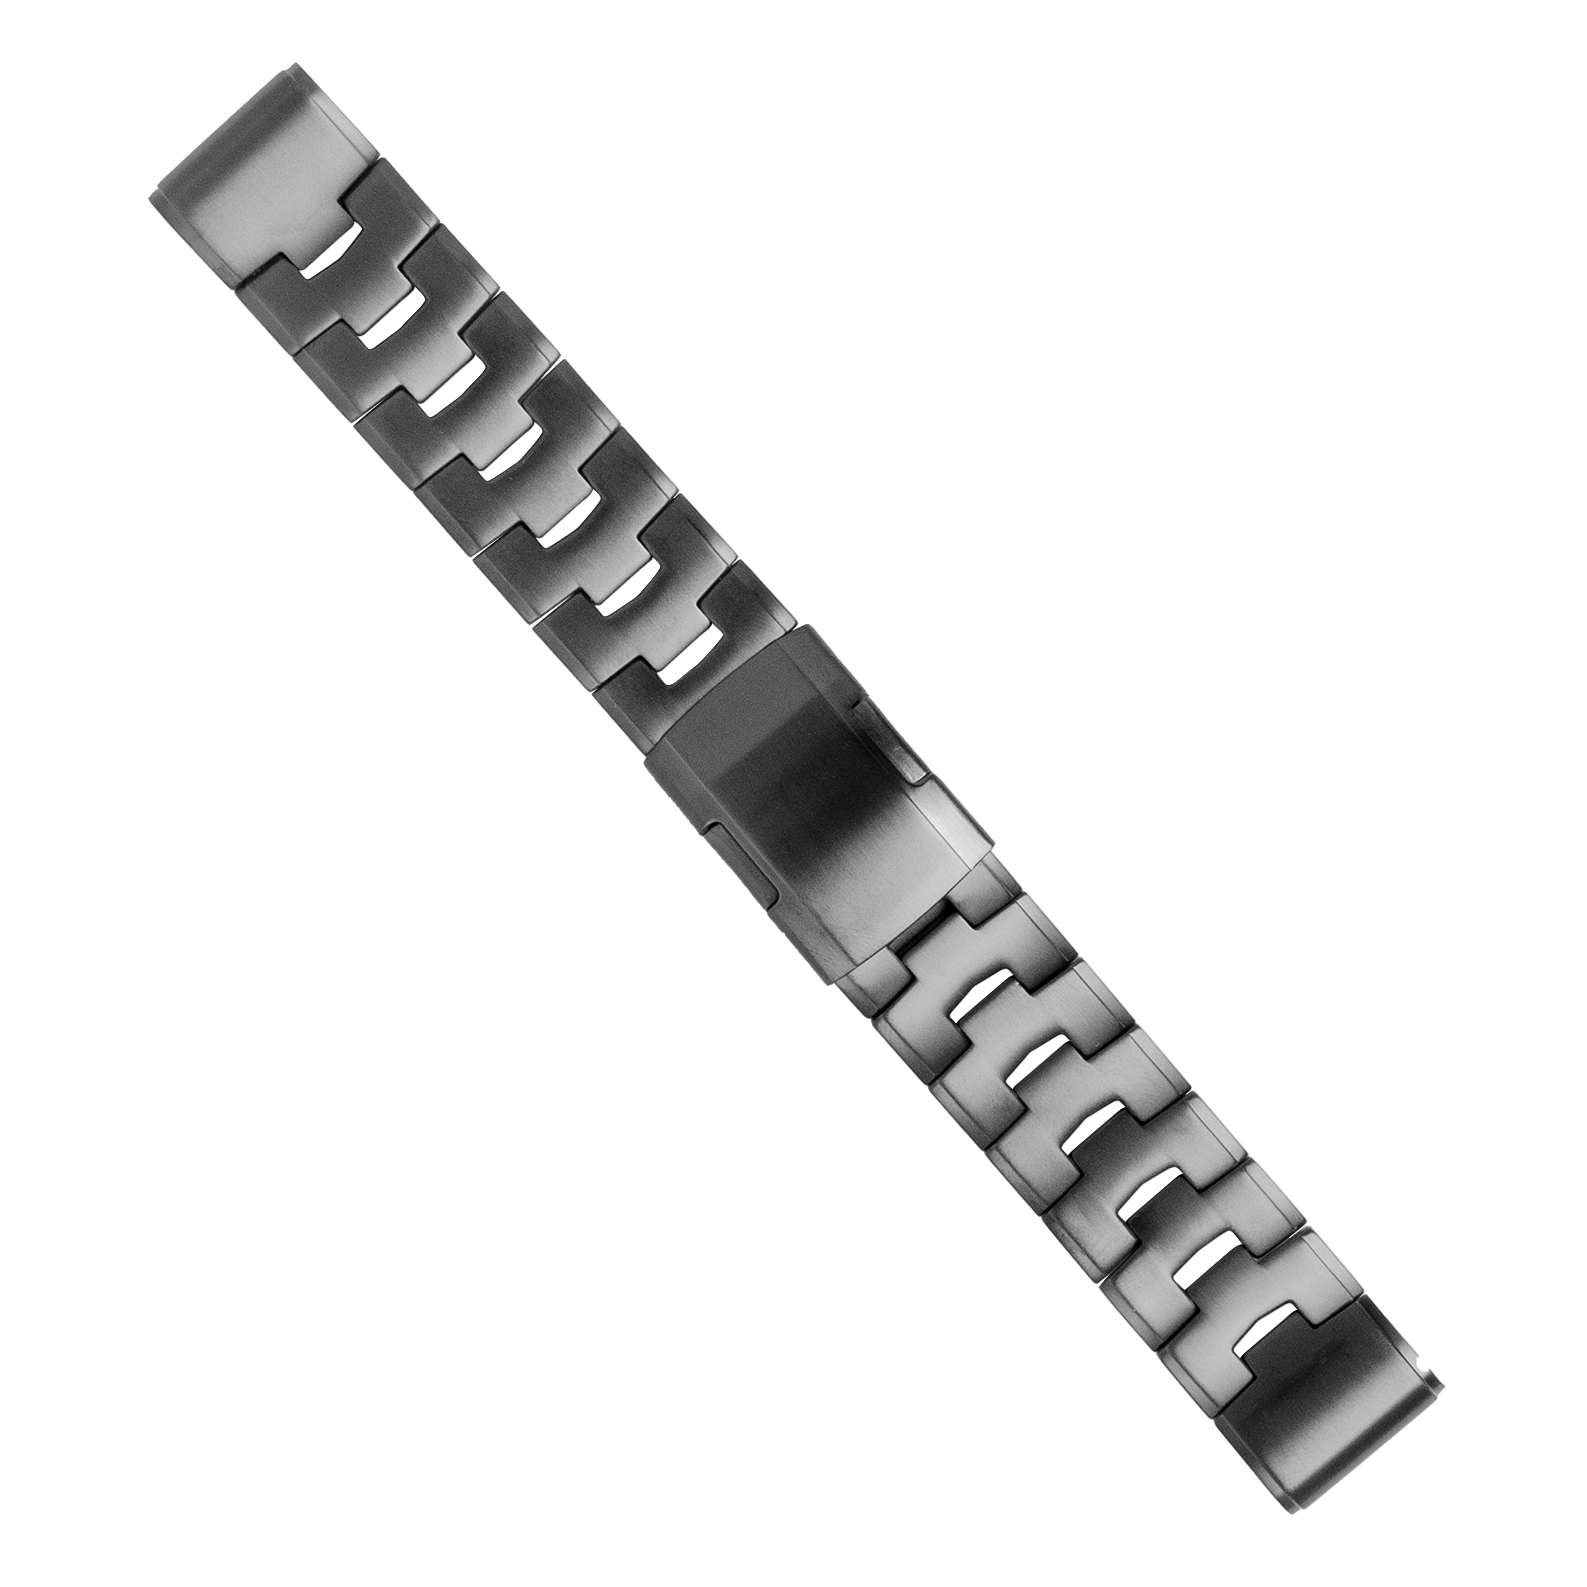 [QuickFit] Titanium Bracelet - Dark Gun Metal Grey 22mm